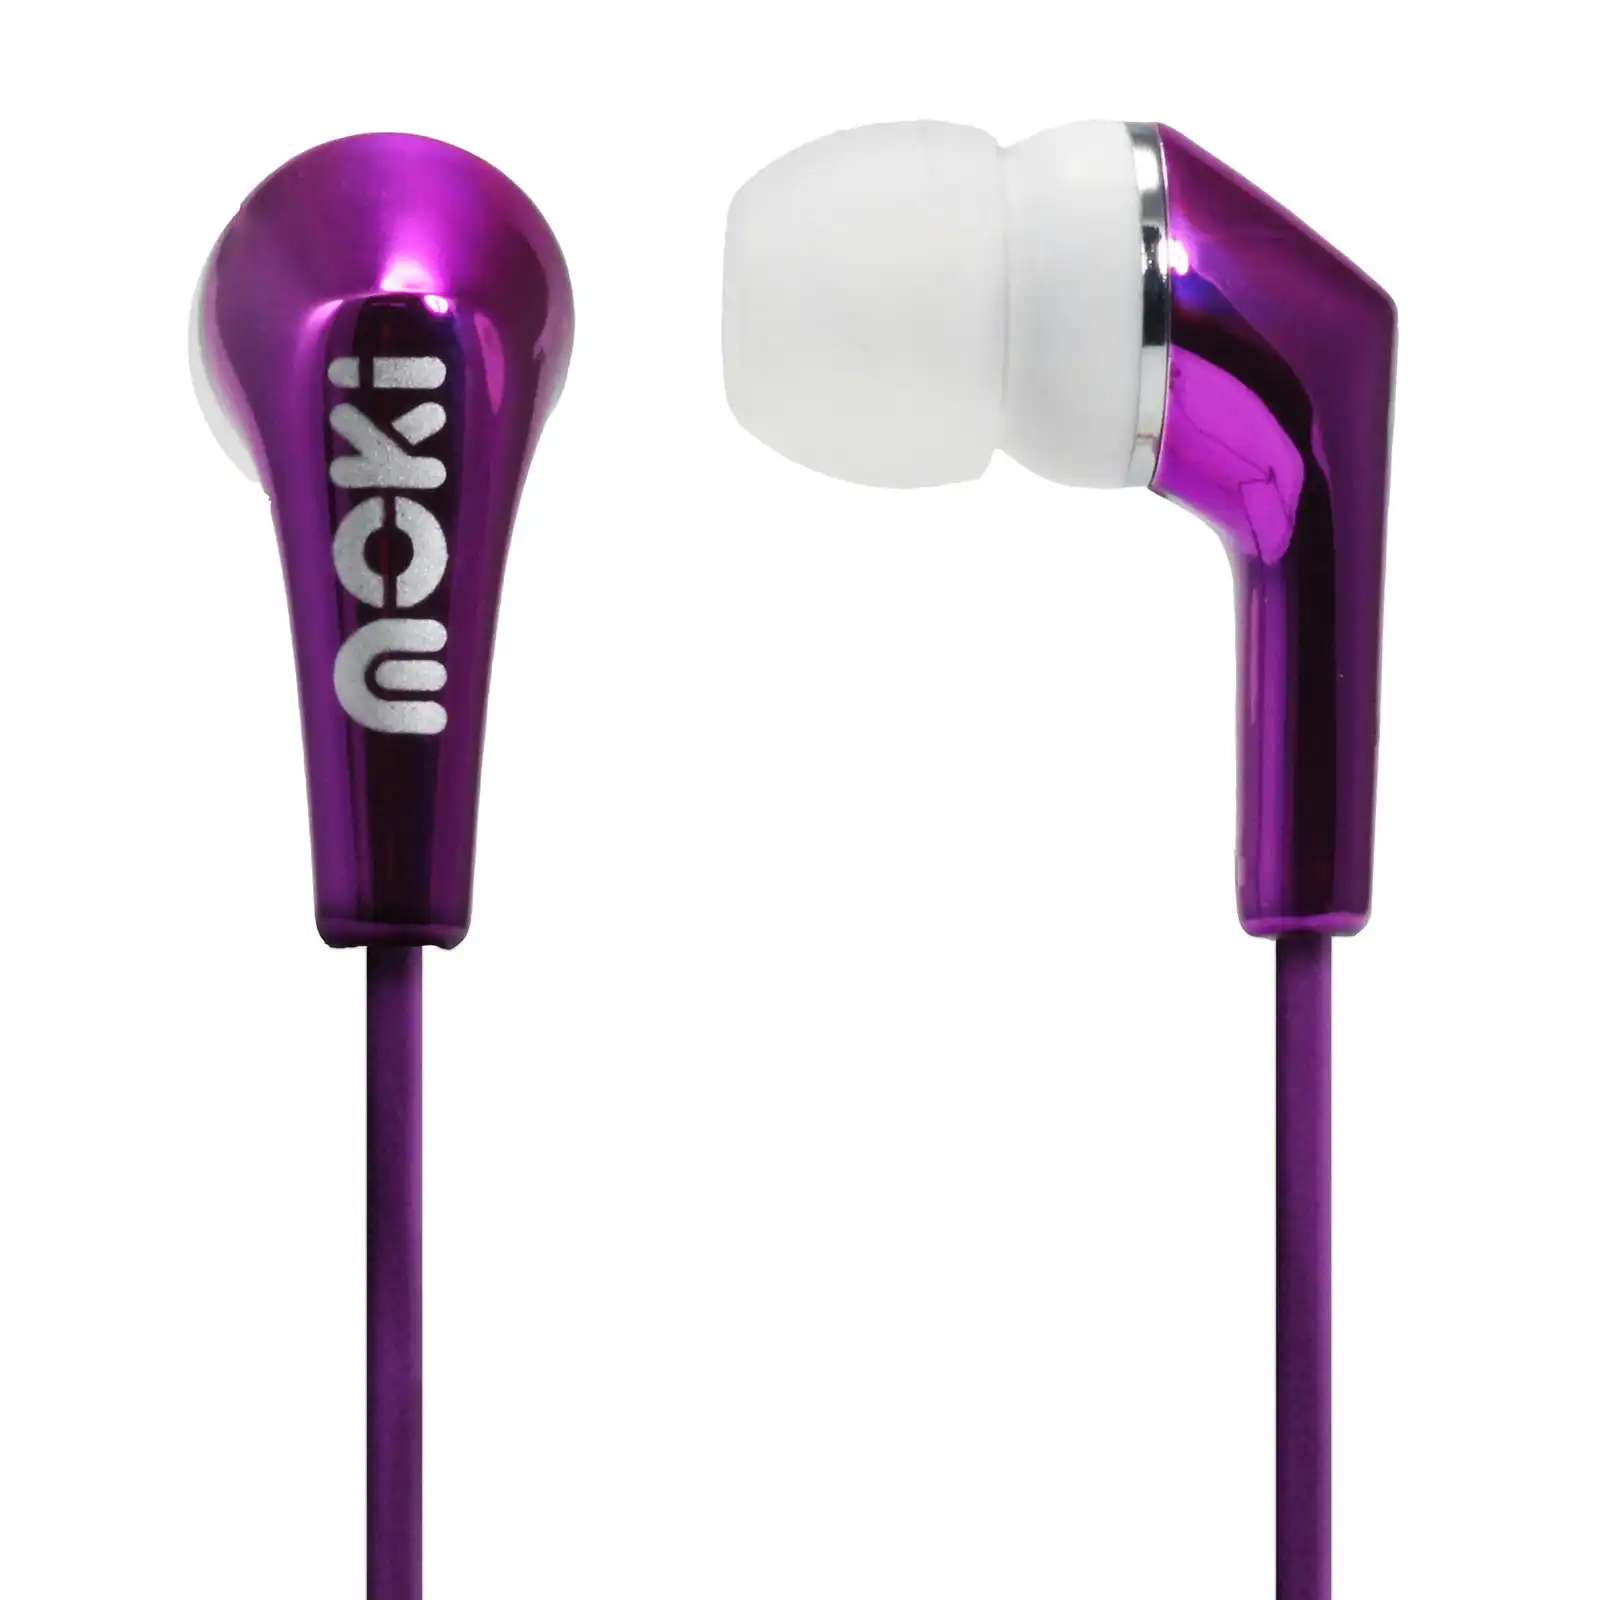 Moki Silicone Buds Metallics Headphones 3.5mm Earphone for iPhone/Android Pink